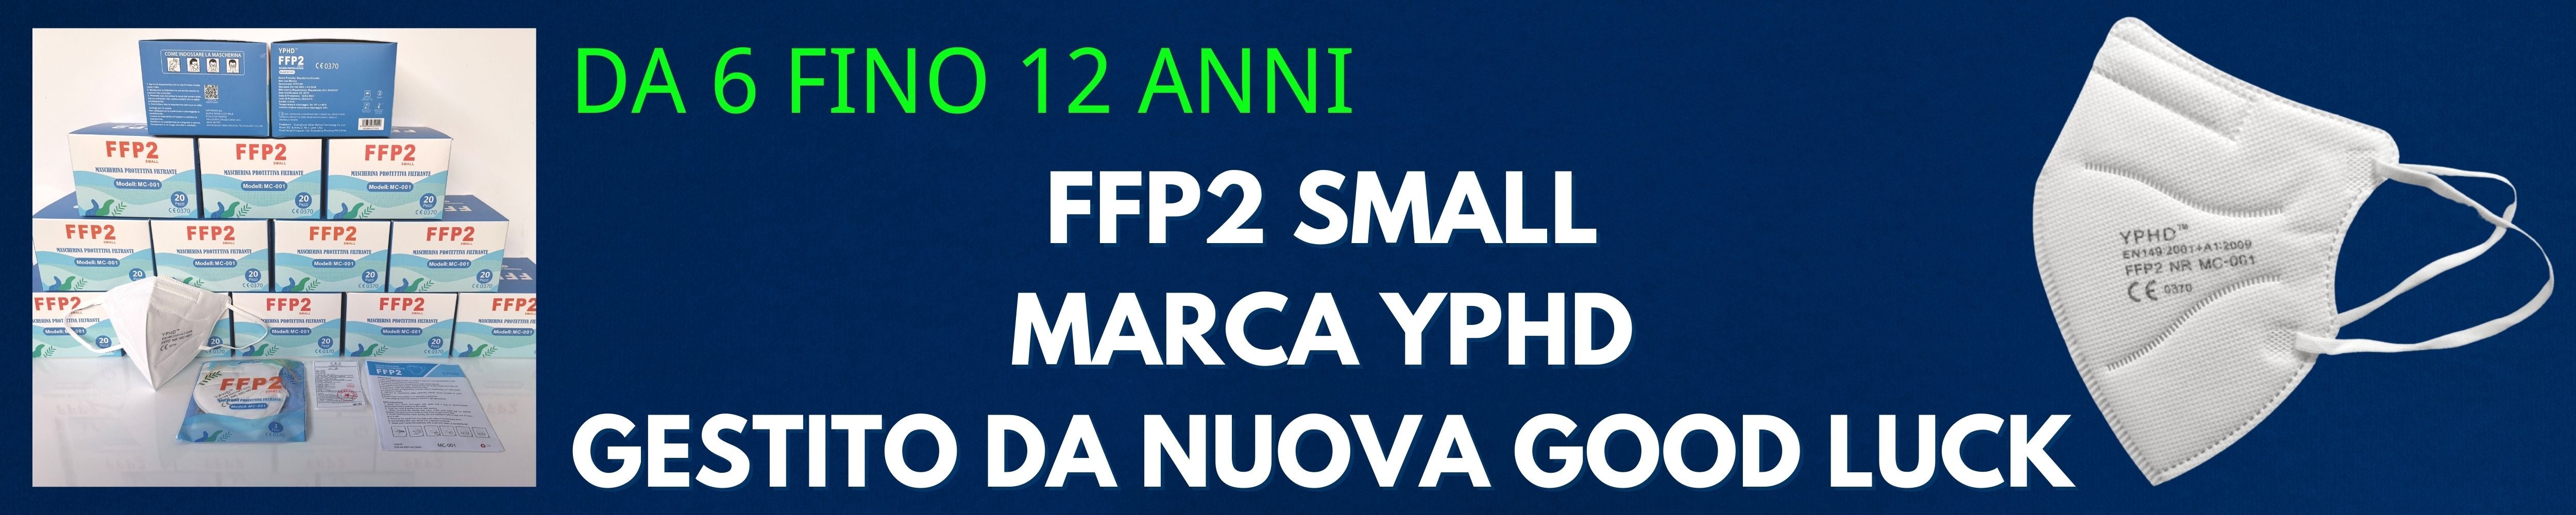 ffp2 small